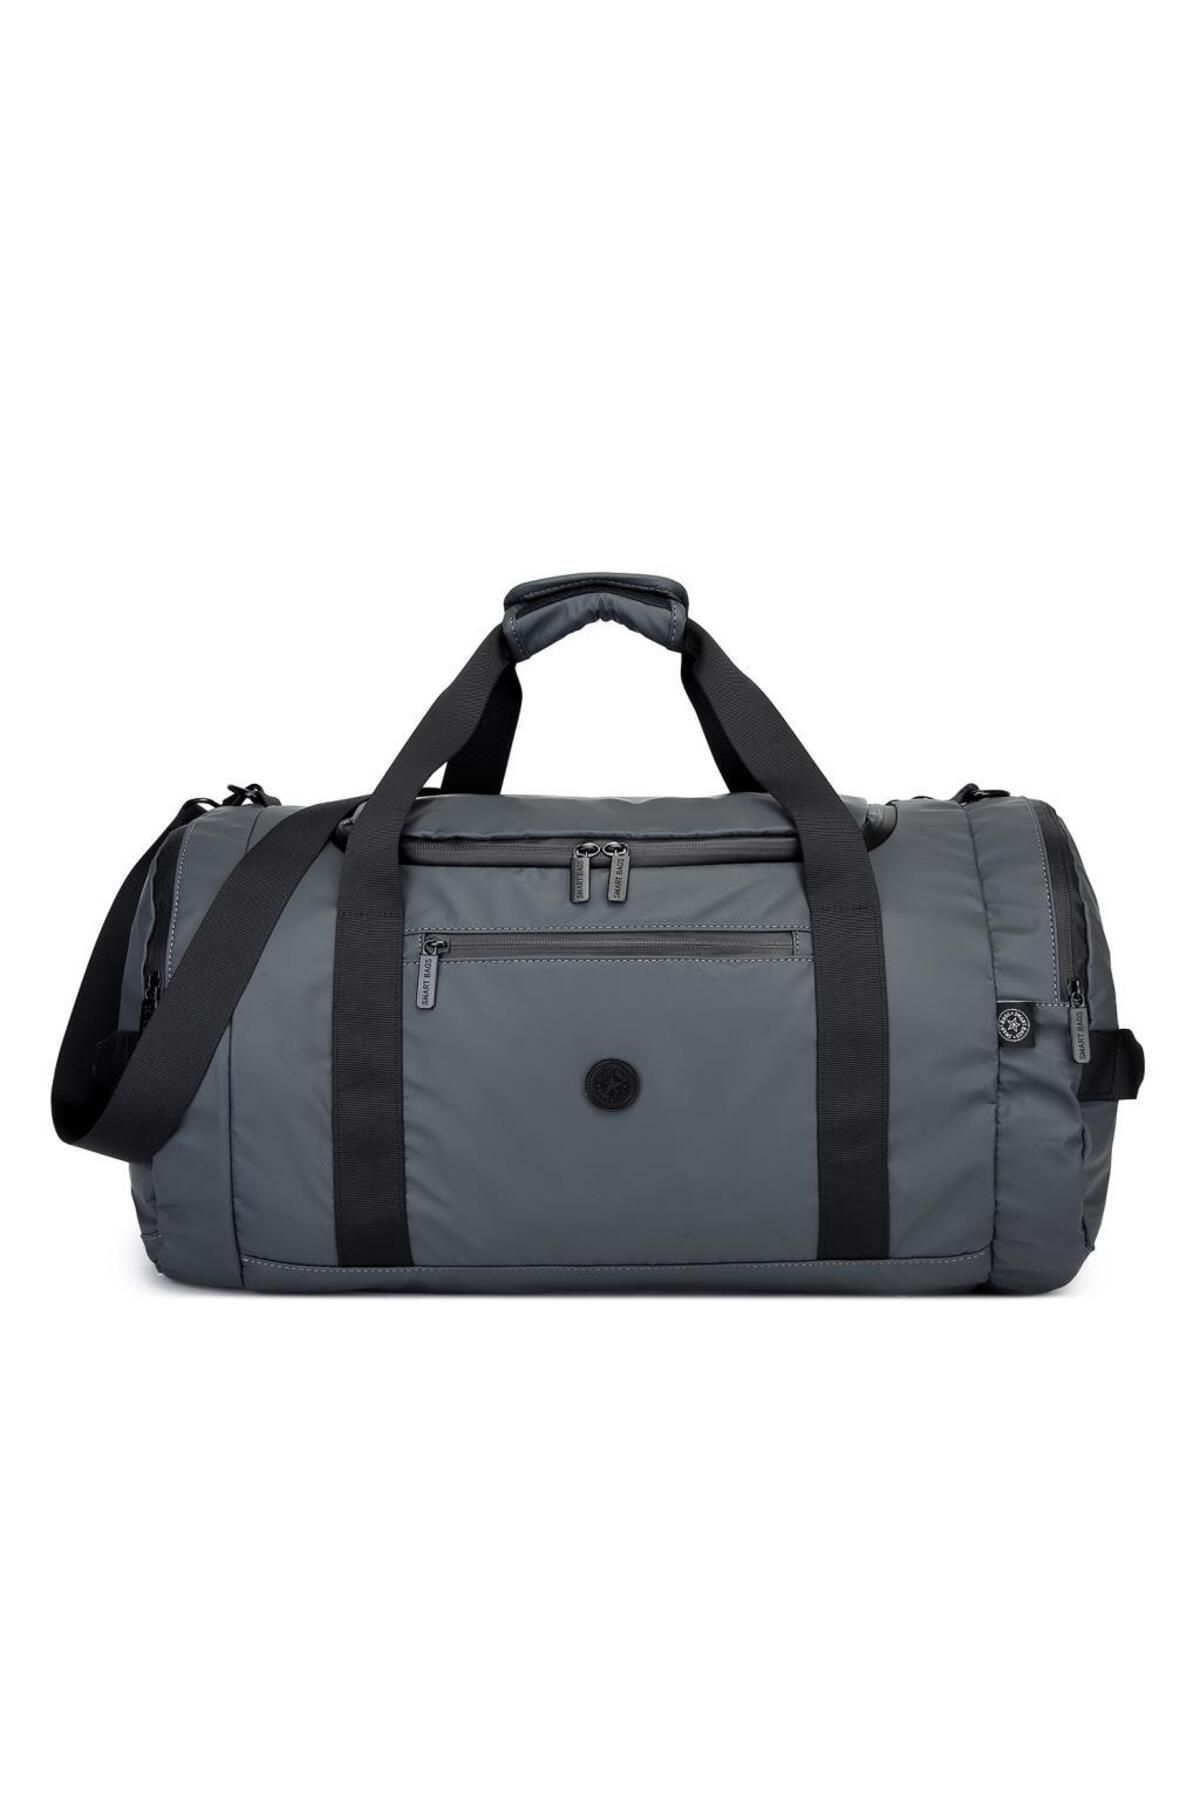 Smart Bags Gumi Kumaş Smart Bags Uniseks Spor Seyahat Çantası 8699